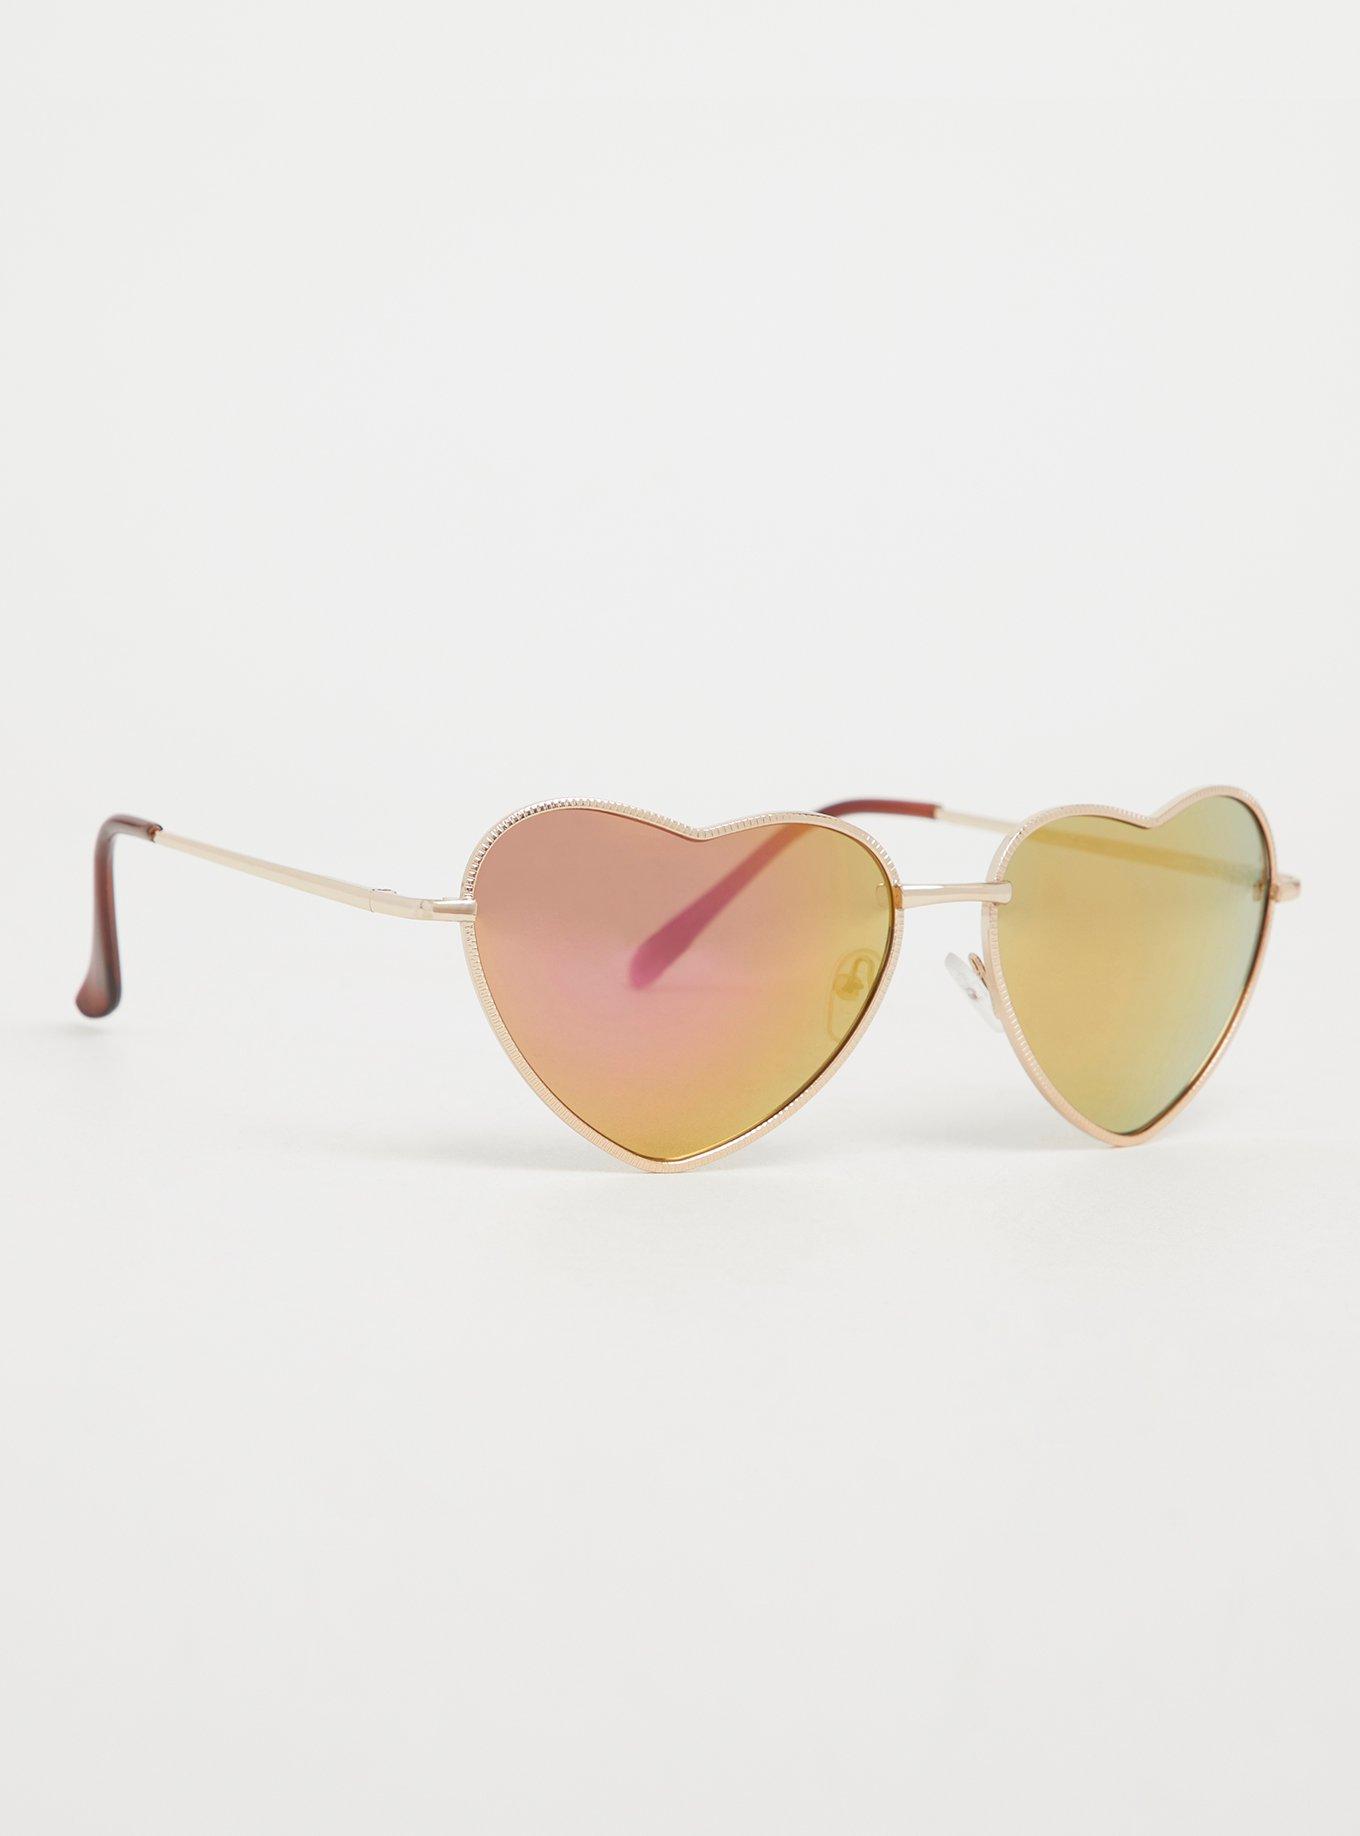 ON THE EDGE SUNGLASSES GOLD  Women's Sunglasses – Betsey Johnson